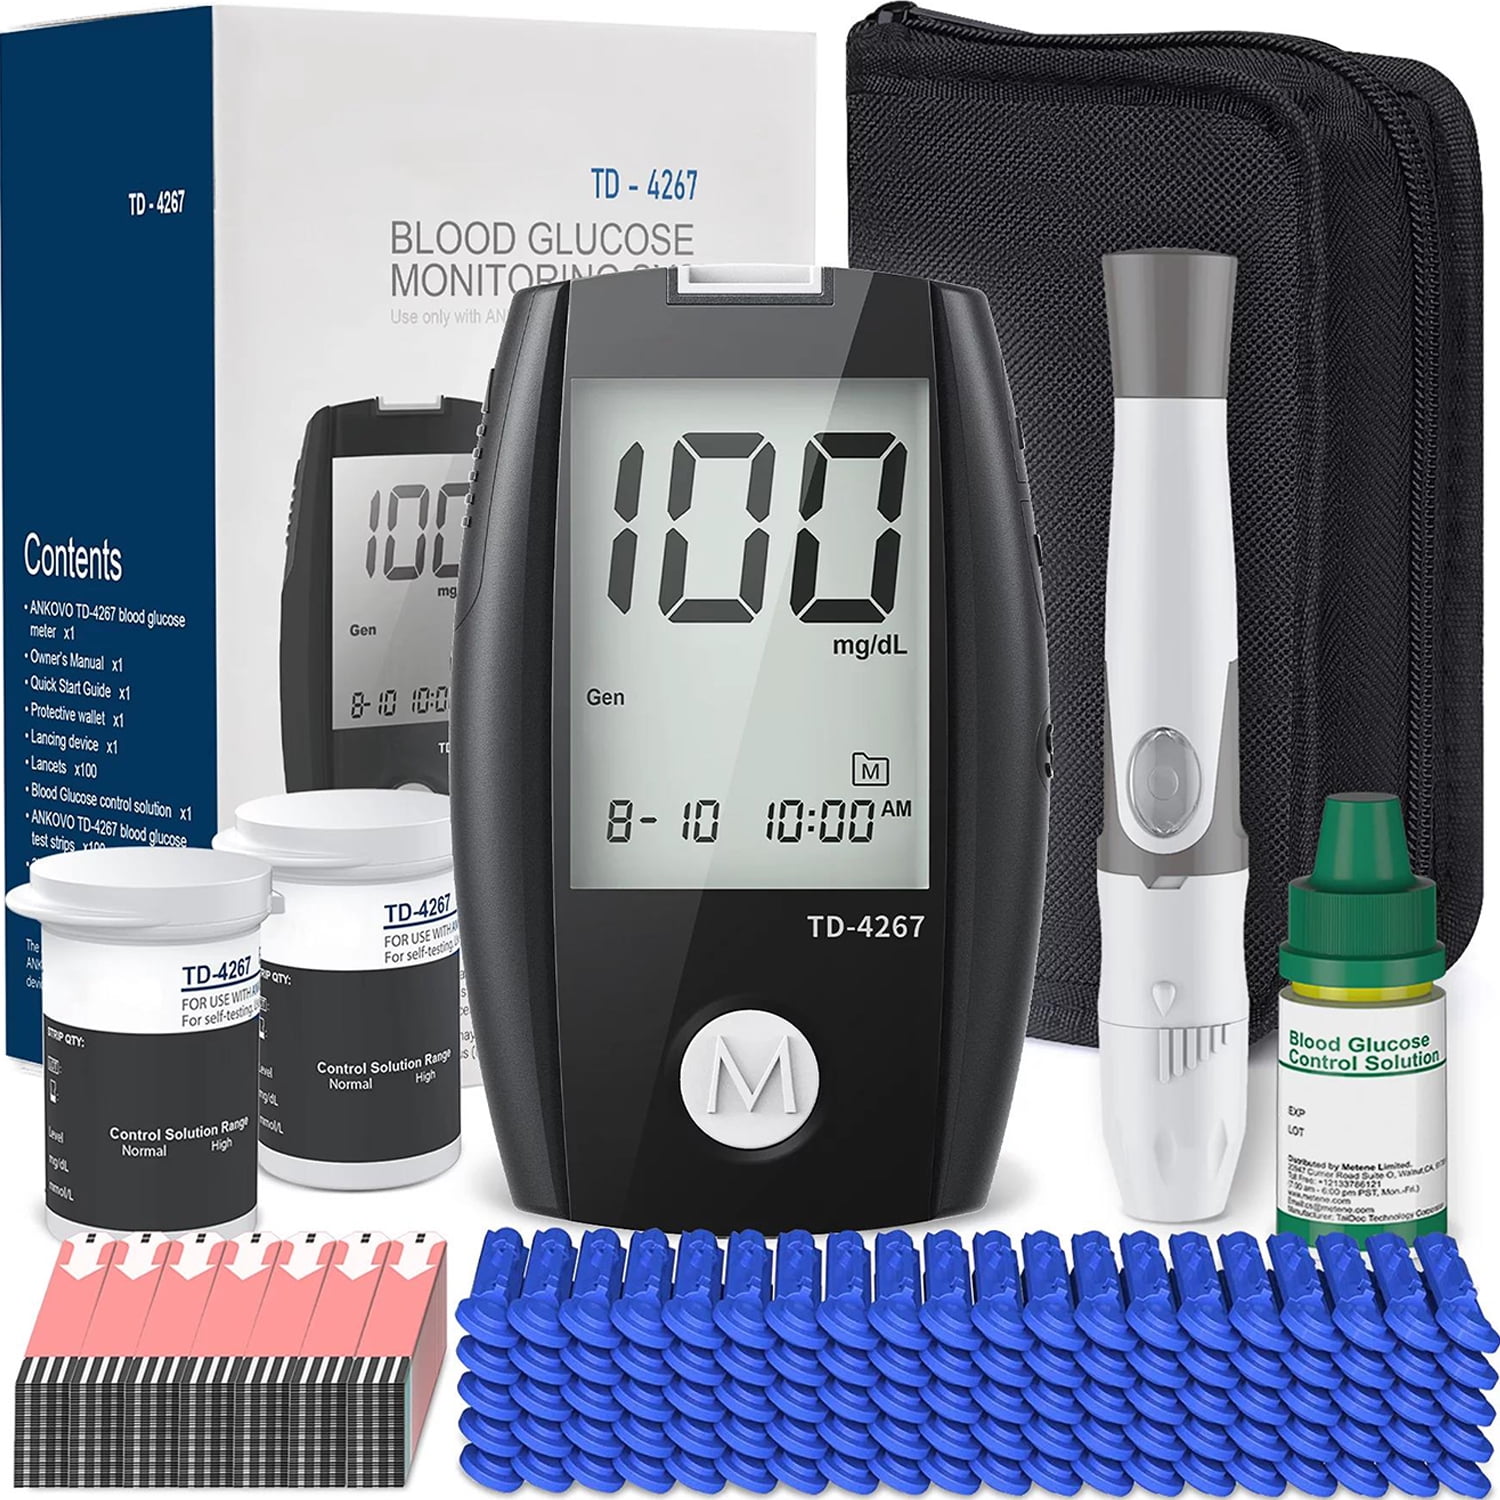 On Call Plus Blood Glucose Meter – SMC Direct LLC